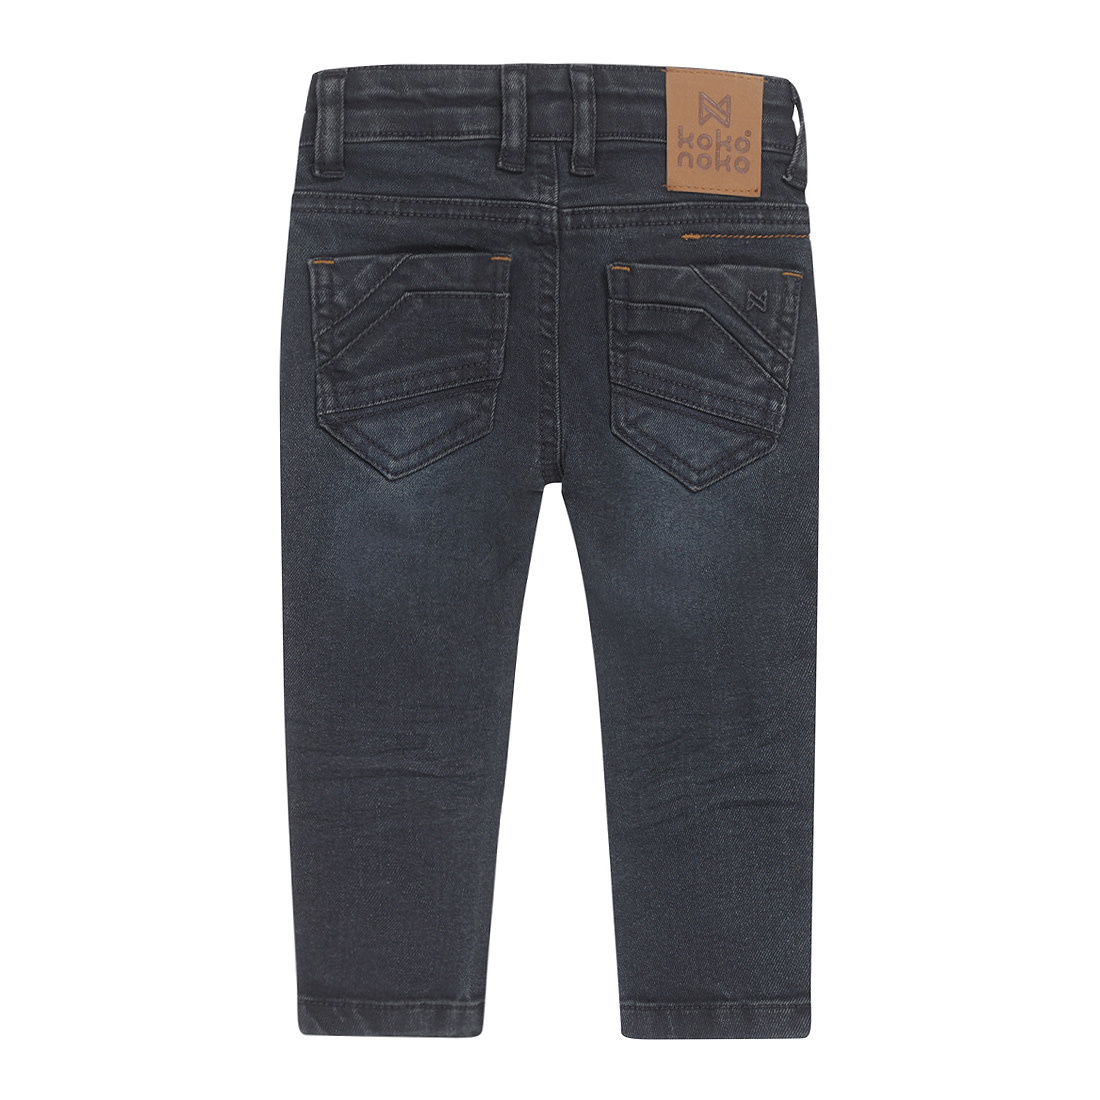 Black Washed Jeans with Pocket Detail